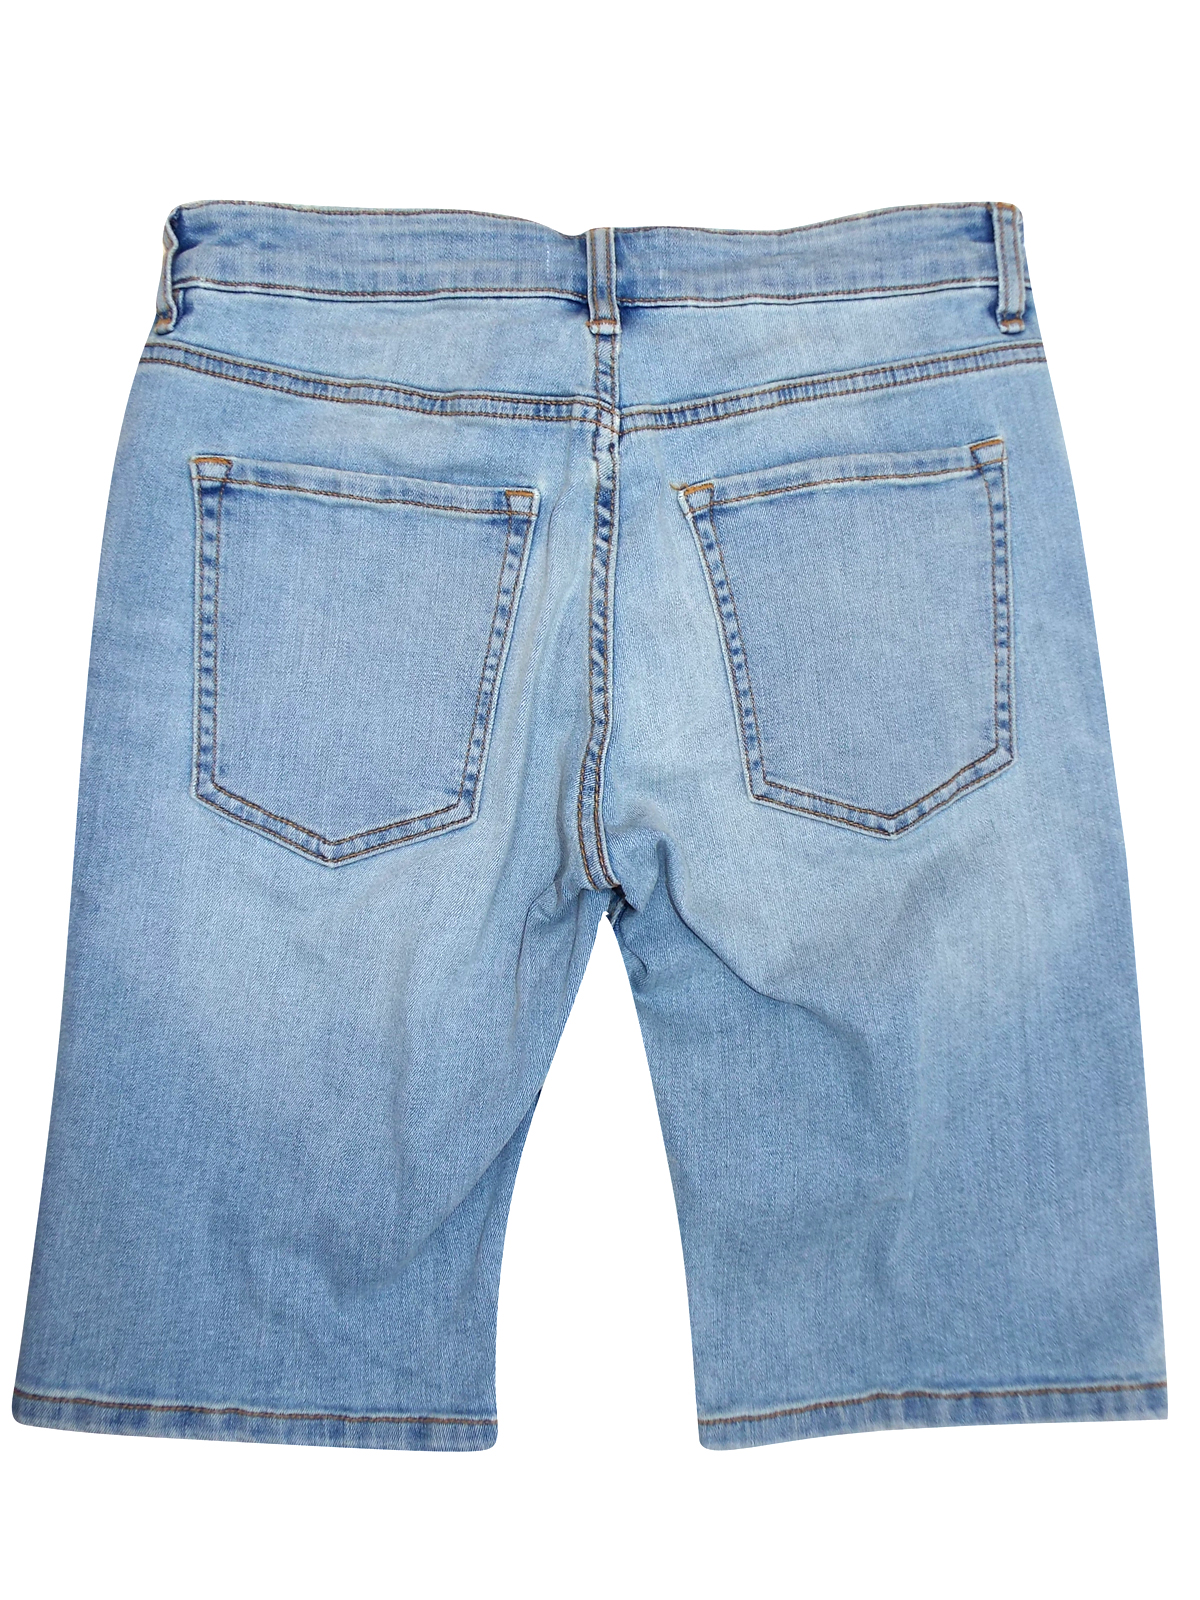 M4ngo STONE-WASH Cotton Rich 5-Pocket Denim Shorts - Waist Size 30 to 38